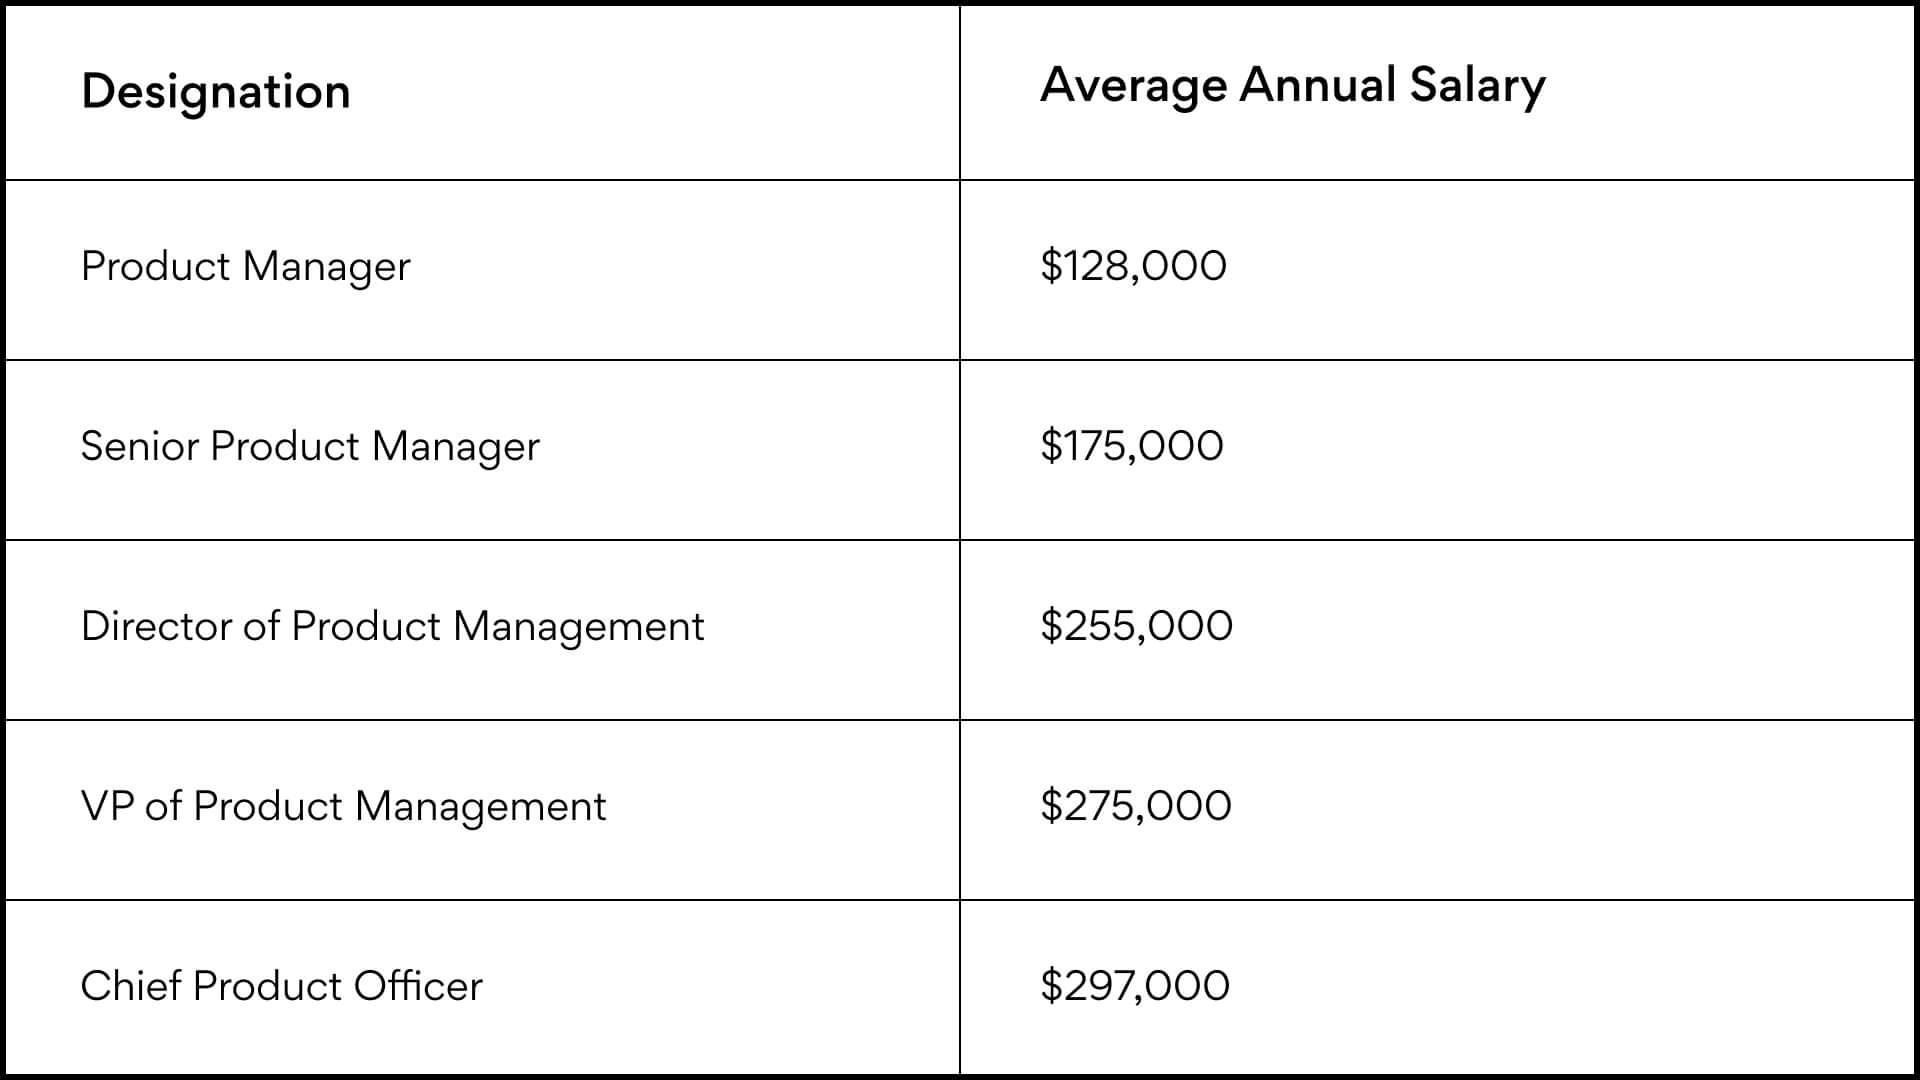 salary vs designation chart